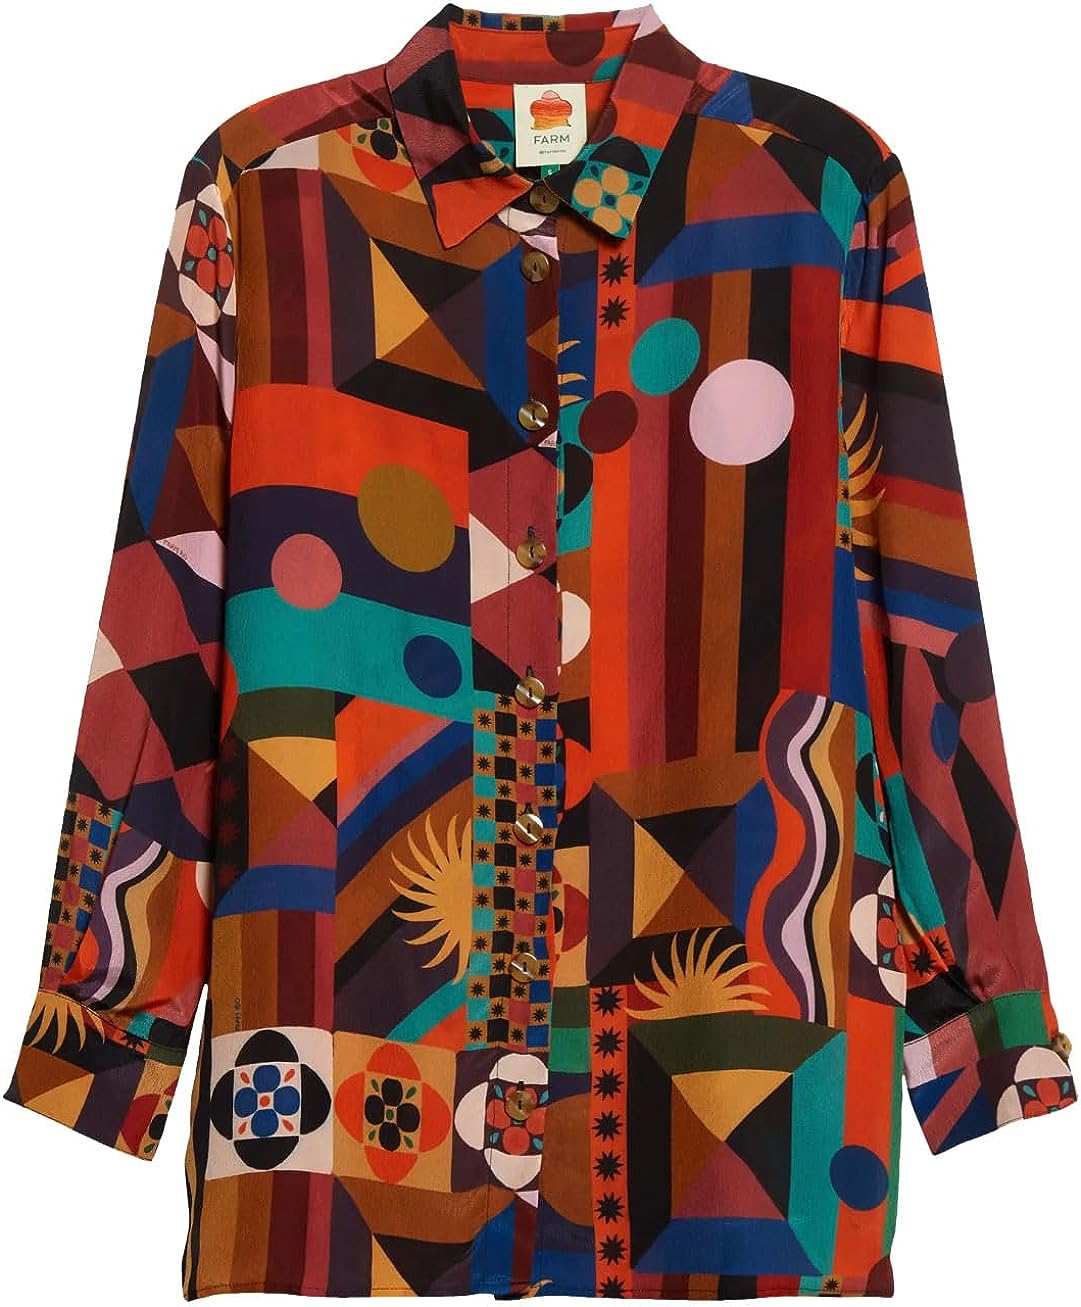 Farm Rio Women Tropical Shapes Multicolor Long Sleeve Shirt Blouse